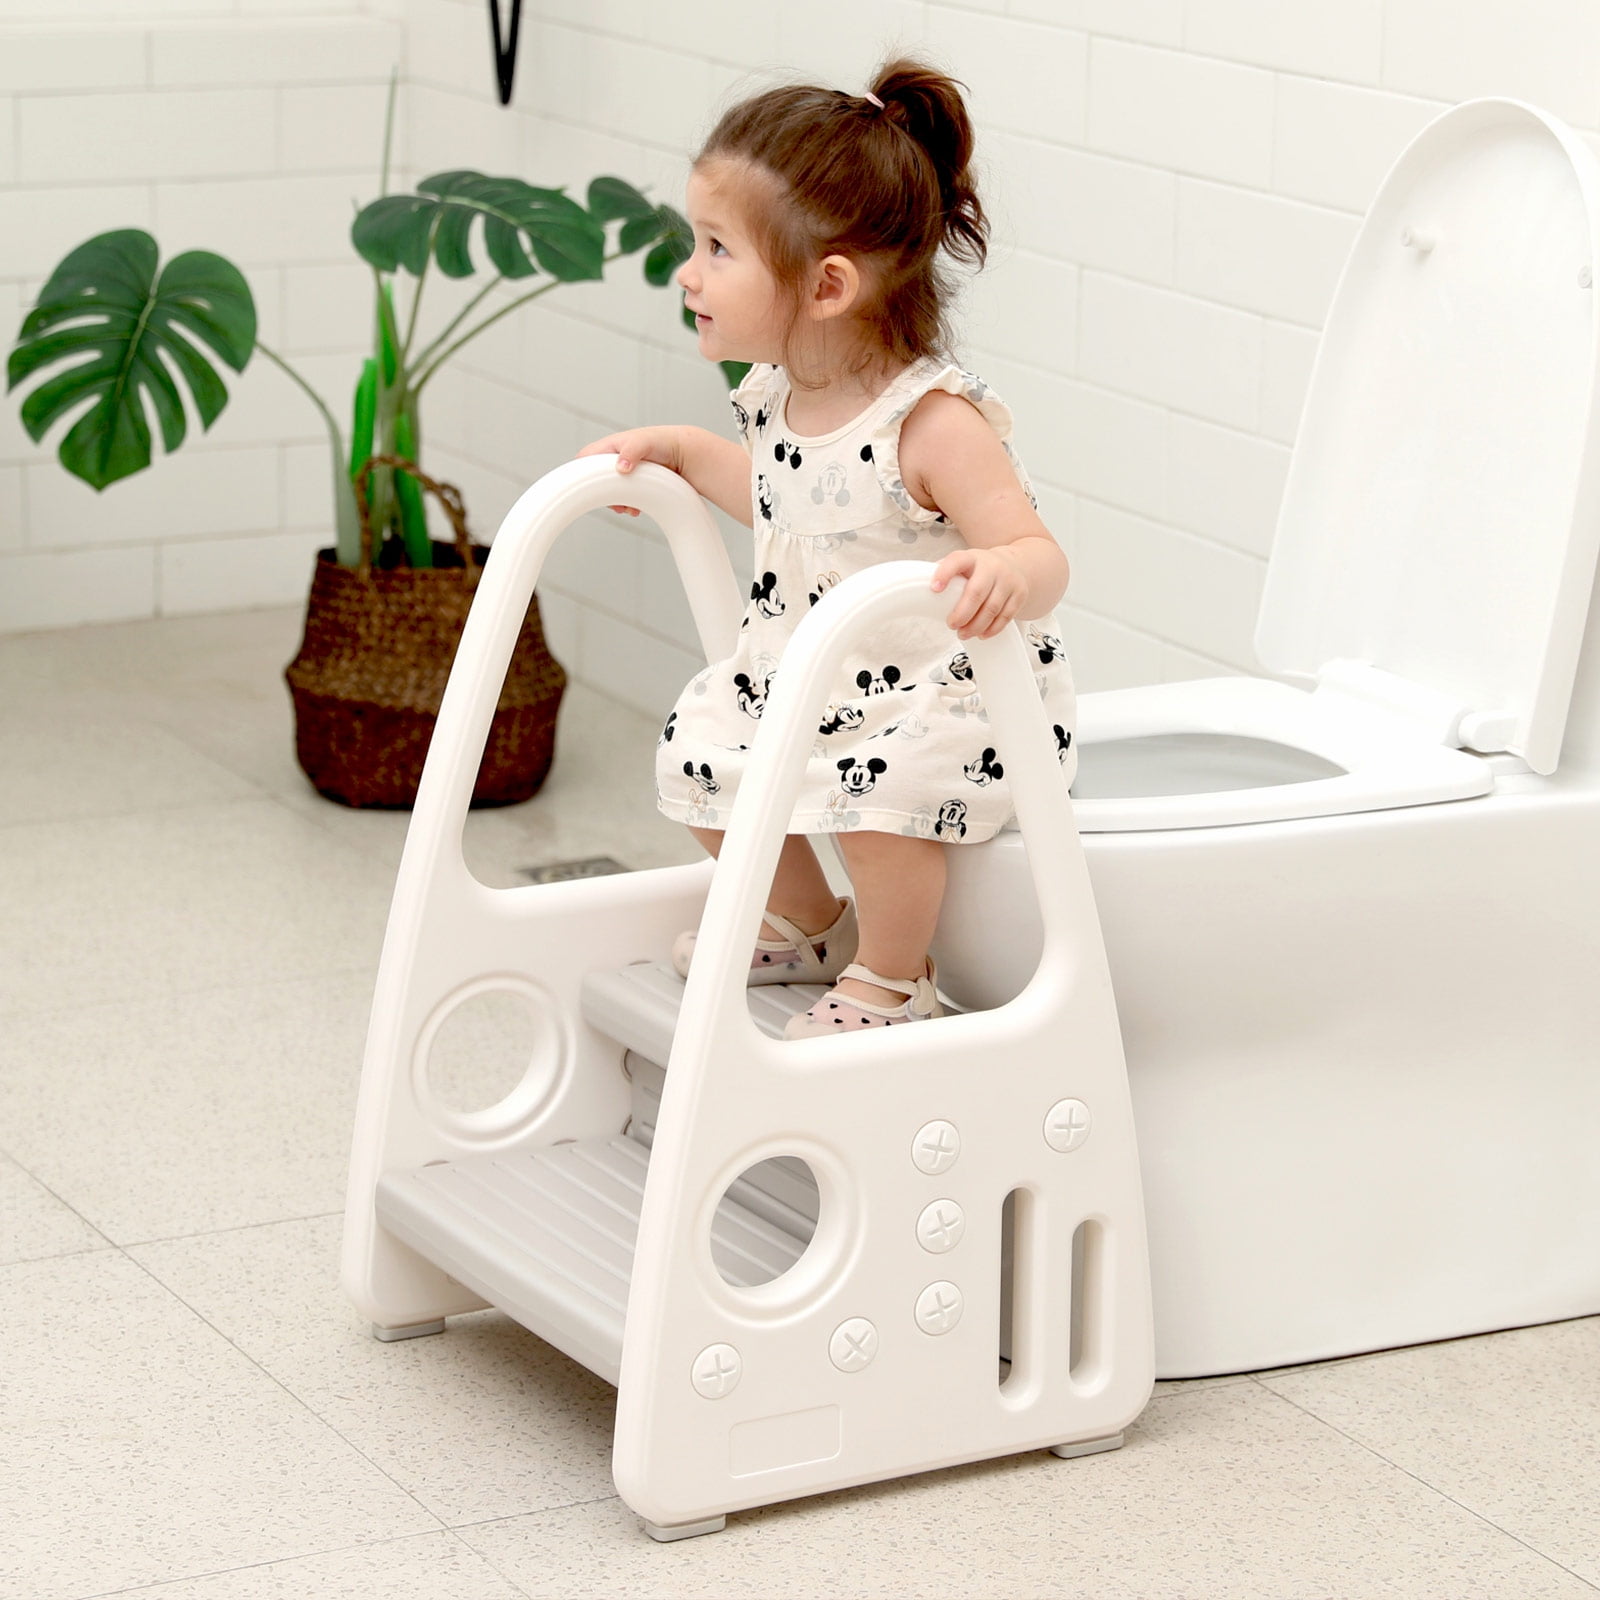 BABY KIDS STEP STOOL TODDLERS POTTY TOILET TRAINING SAFE NON-SLIP BATHROOM 